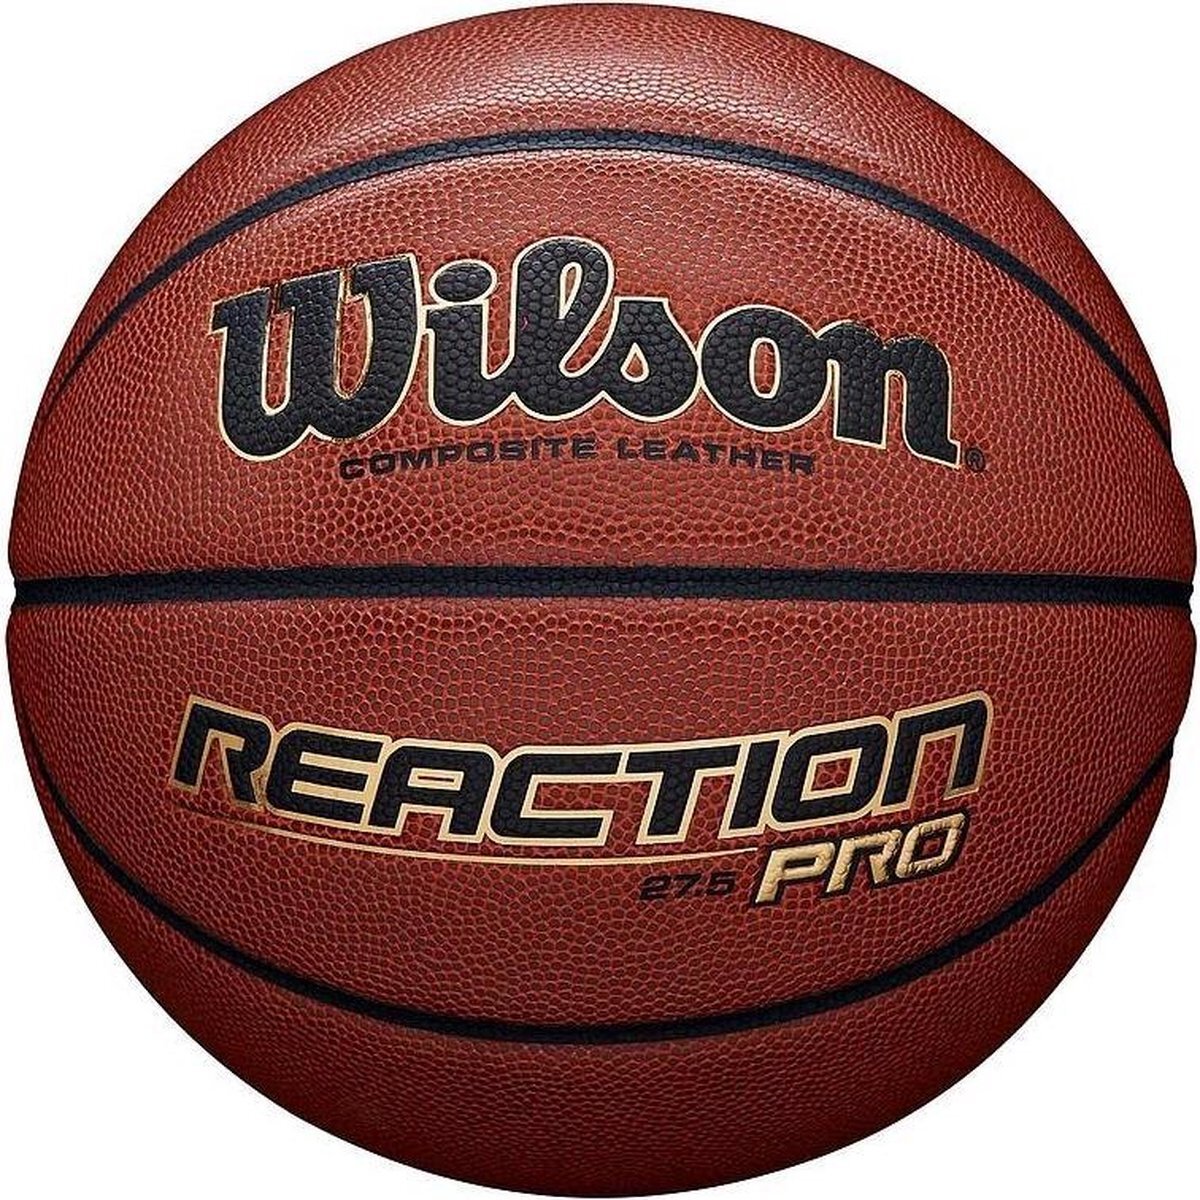 Wilson Basketball Reaction Pro Rubber Bruin Maat 5